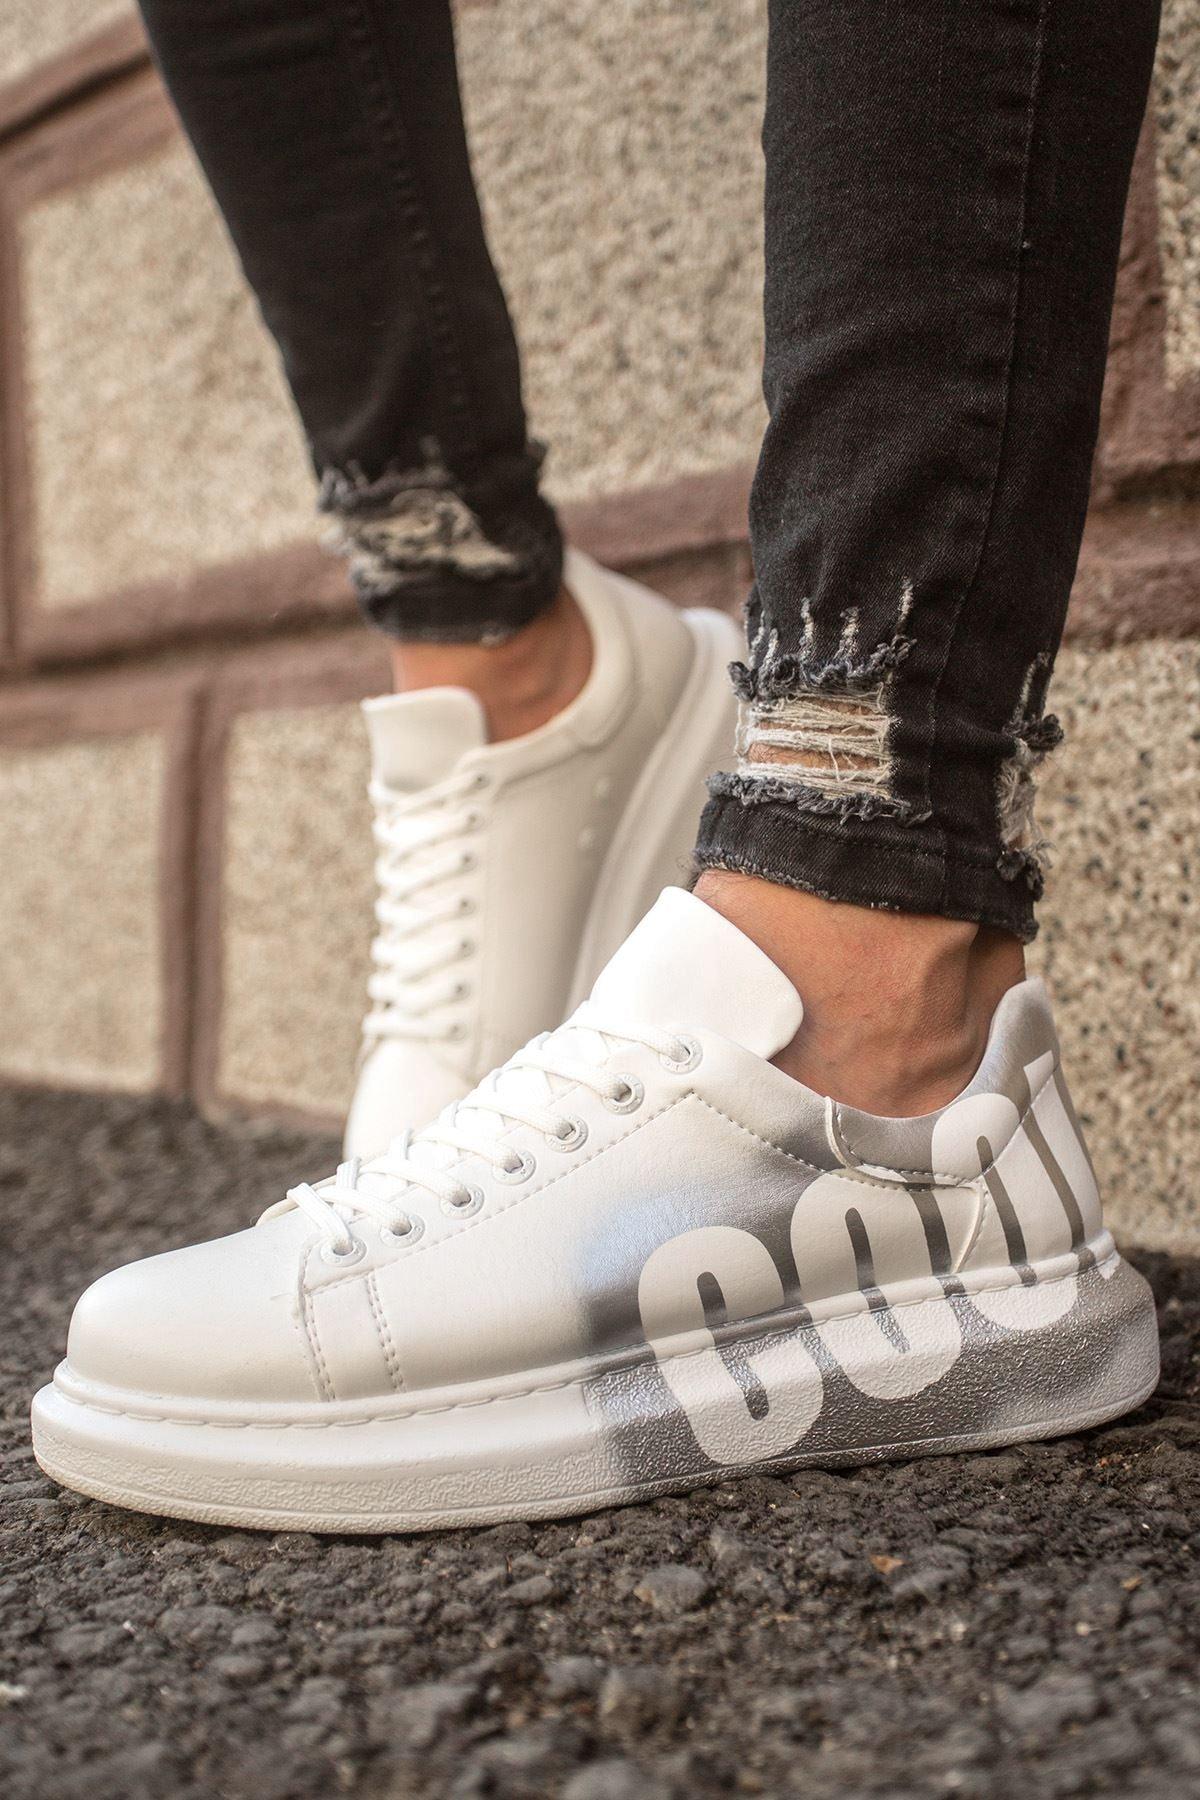 CH254 Men's Unisex White-Silver Casual Sneaker Sports Shoes - STREET MODE ™